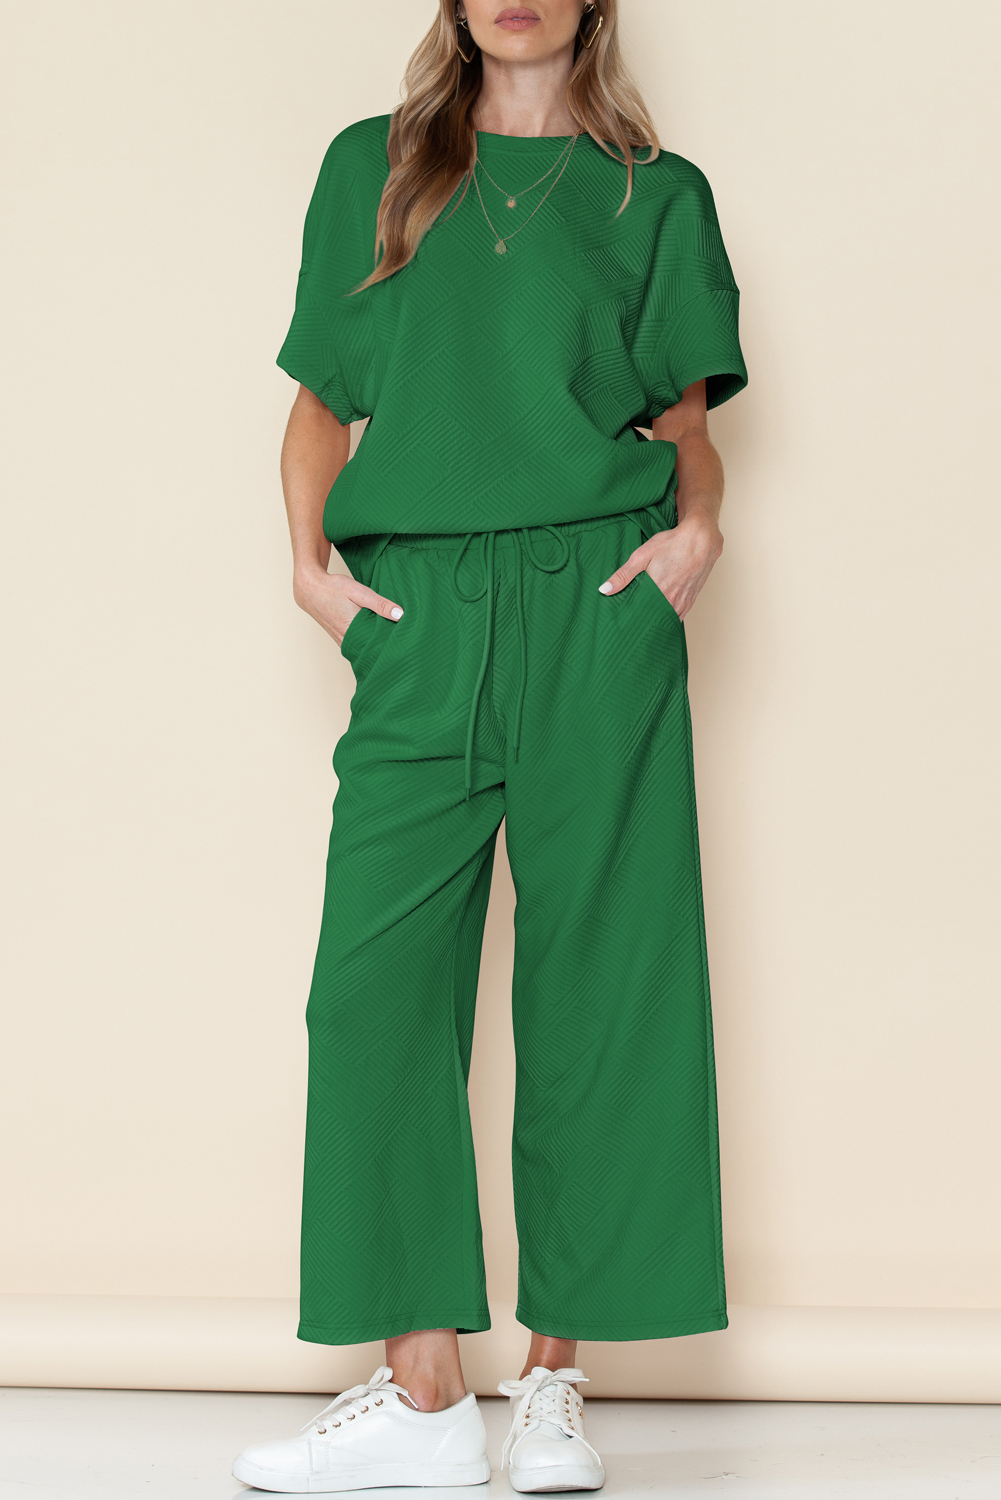 Shewin Wholesale Western Clothing  Dark Green Textured Loose Fit T Shirt and Drawstring PANTS Set